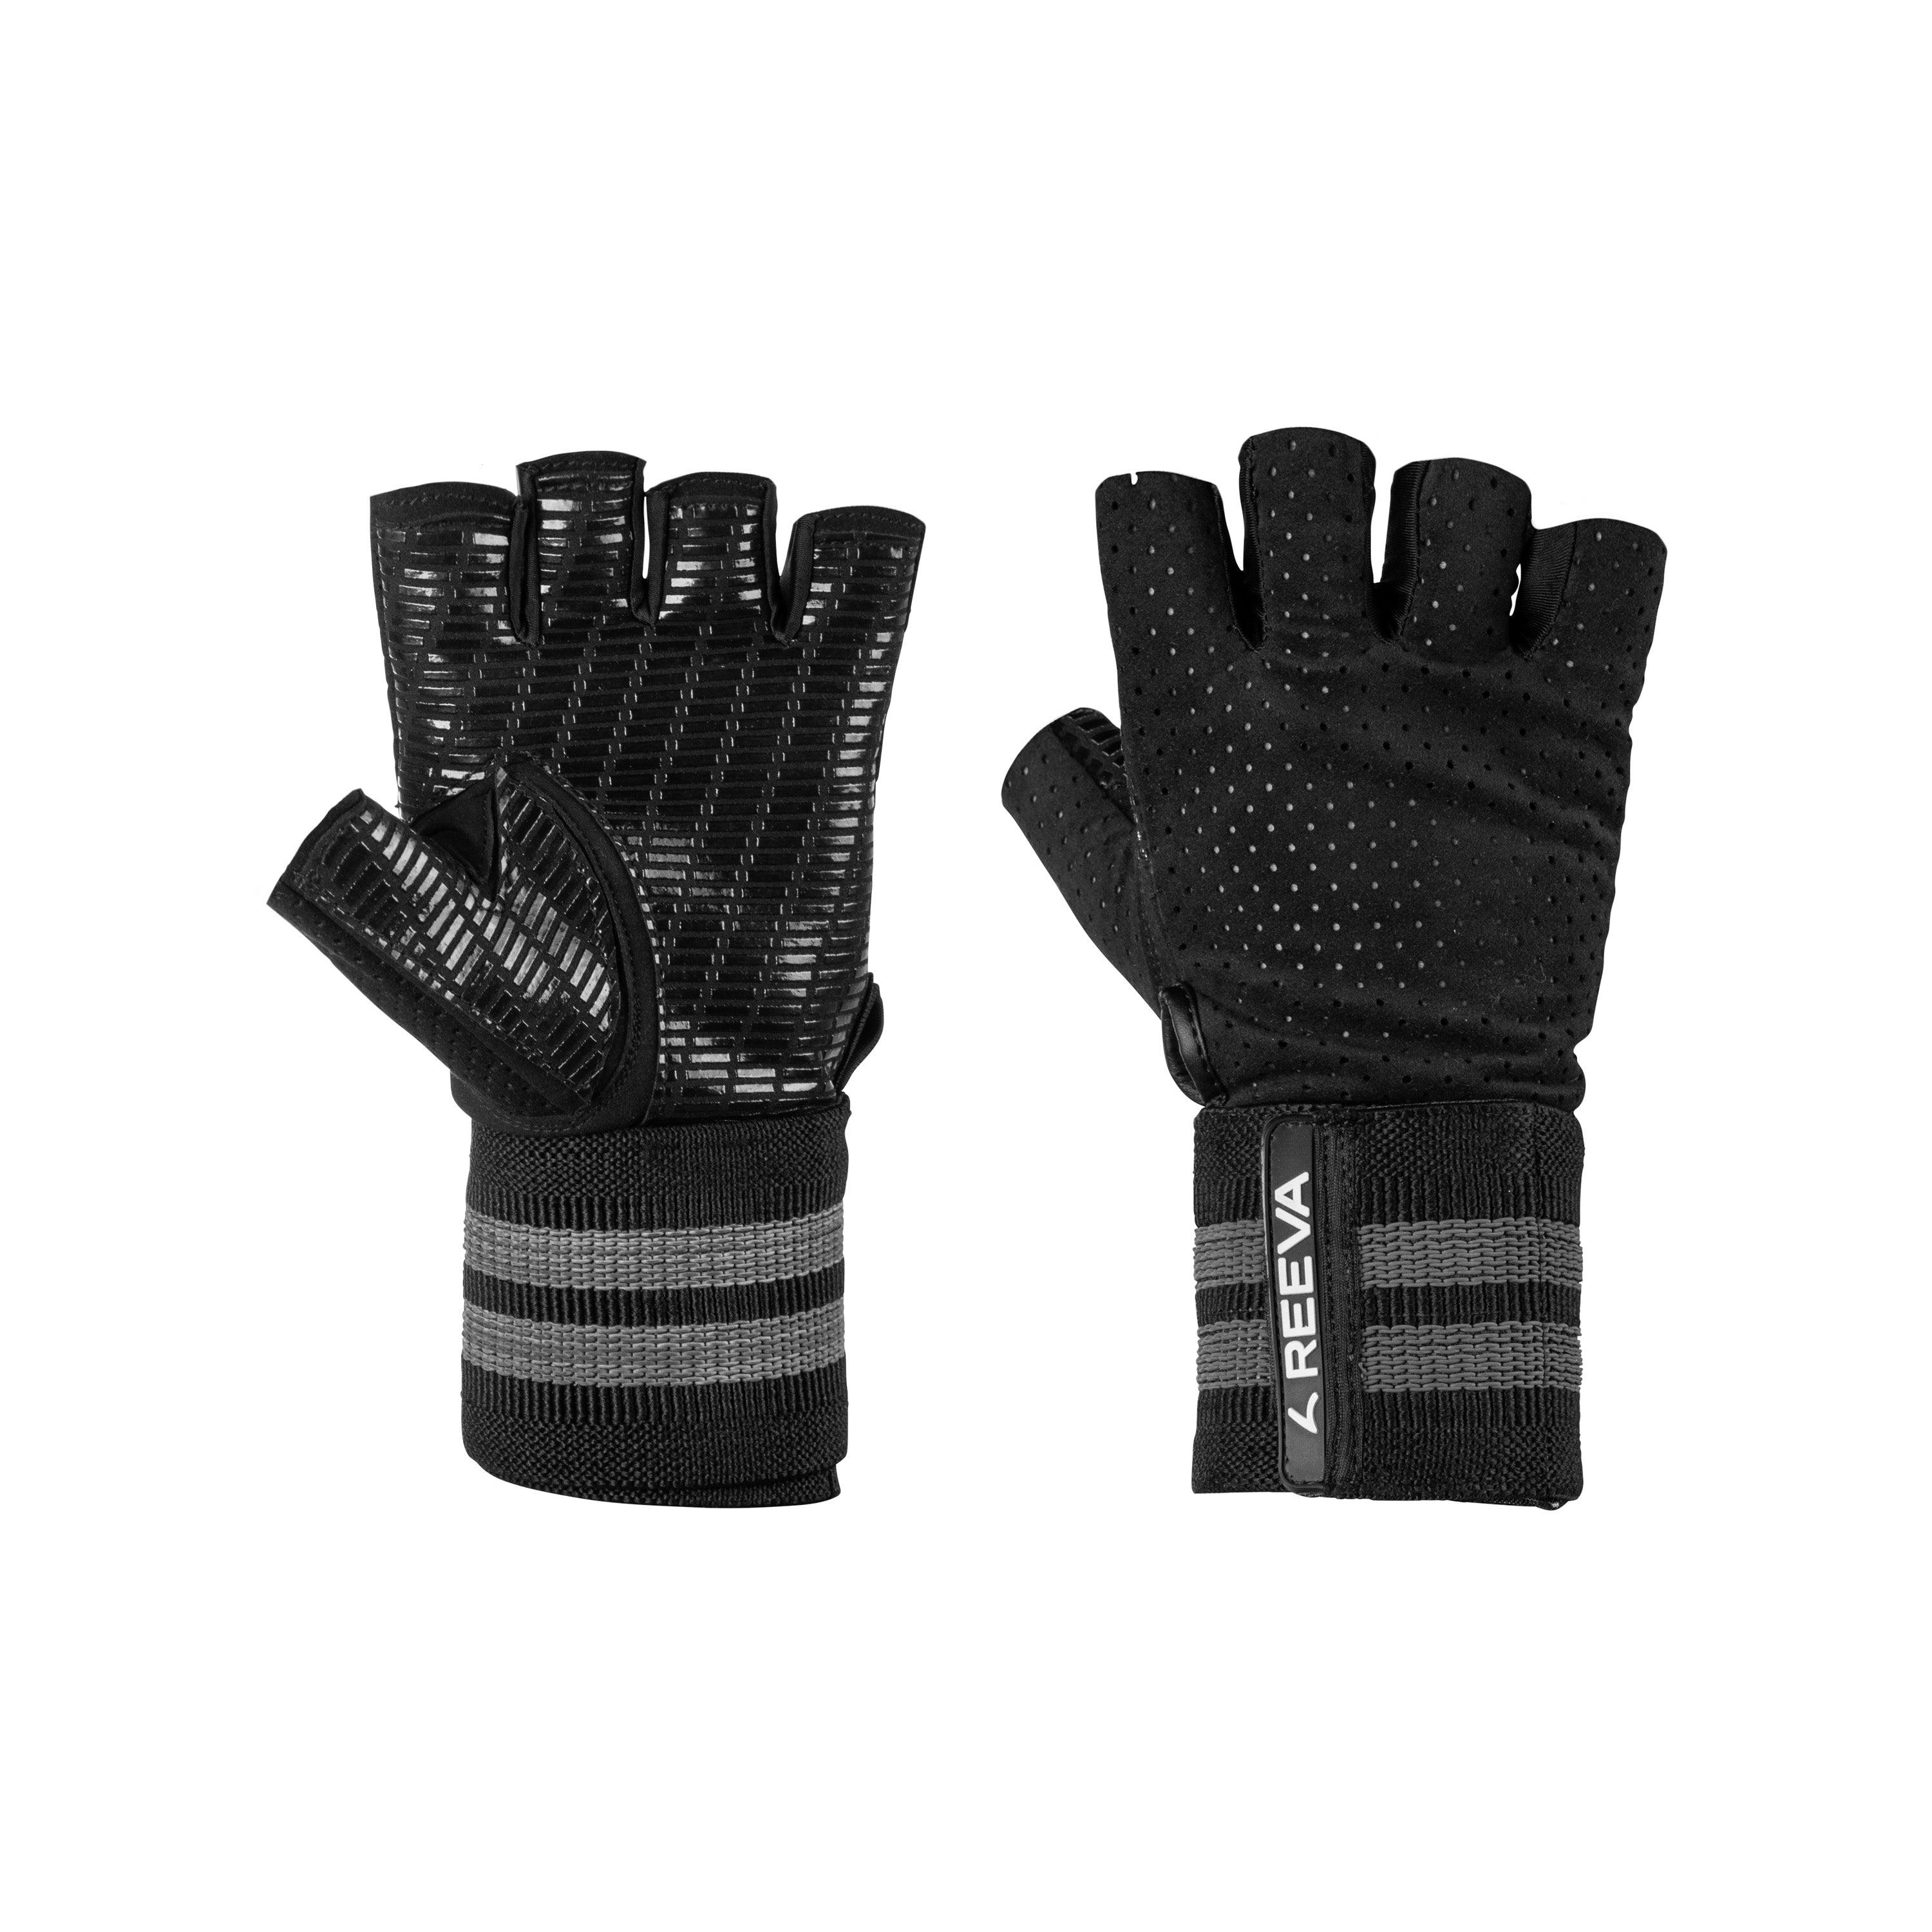 Fitness gloves 3.0 wrist wrap